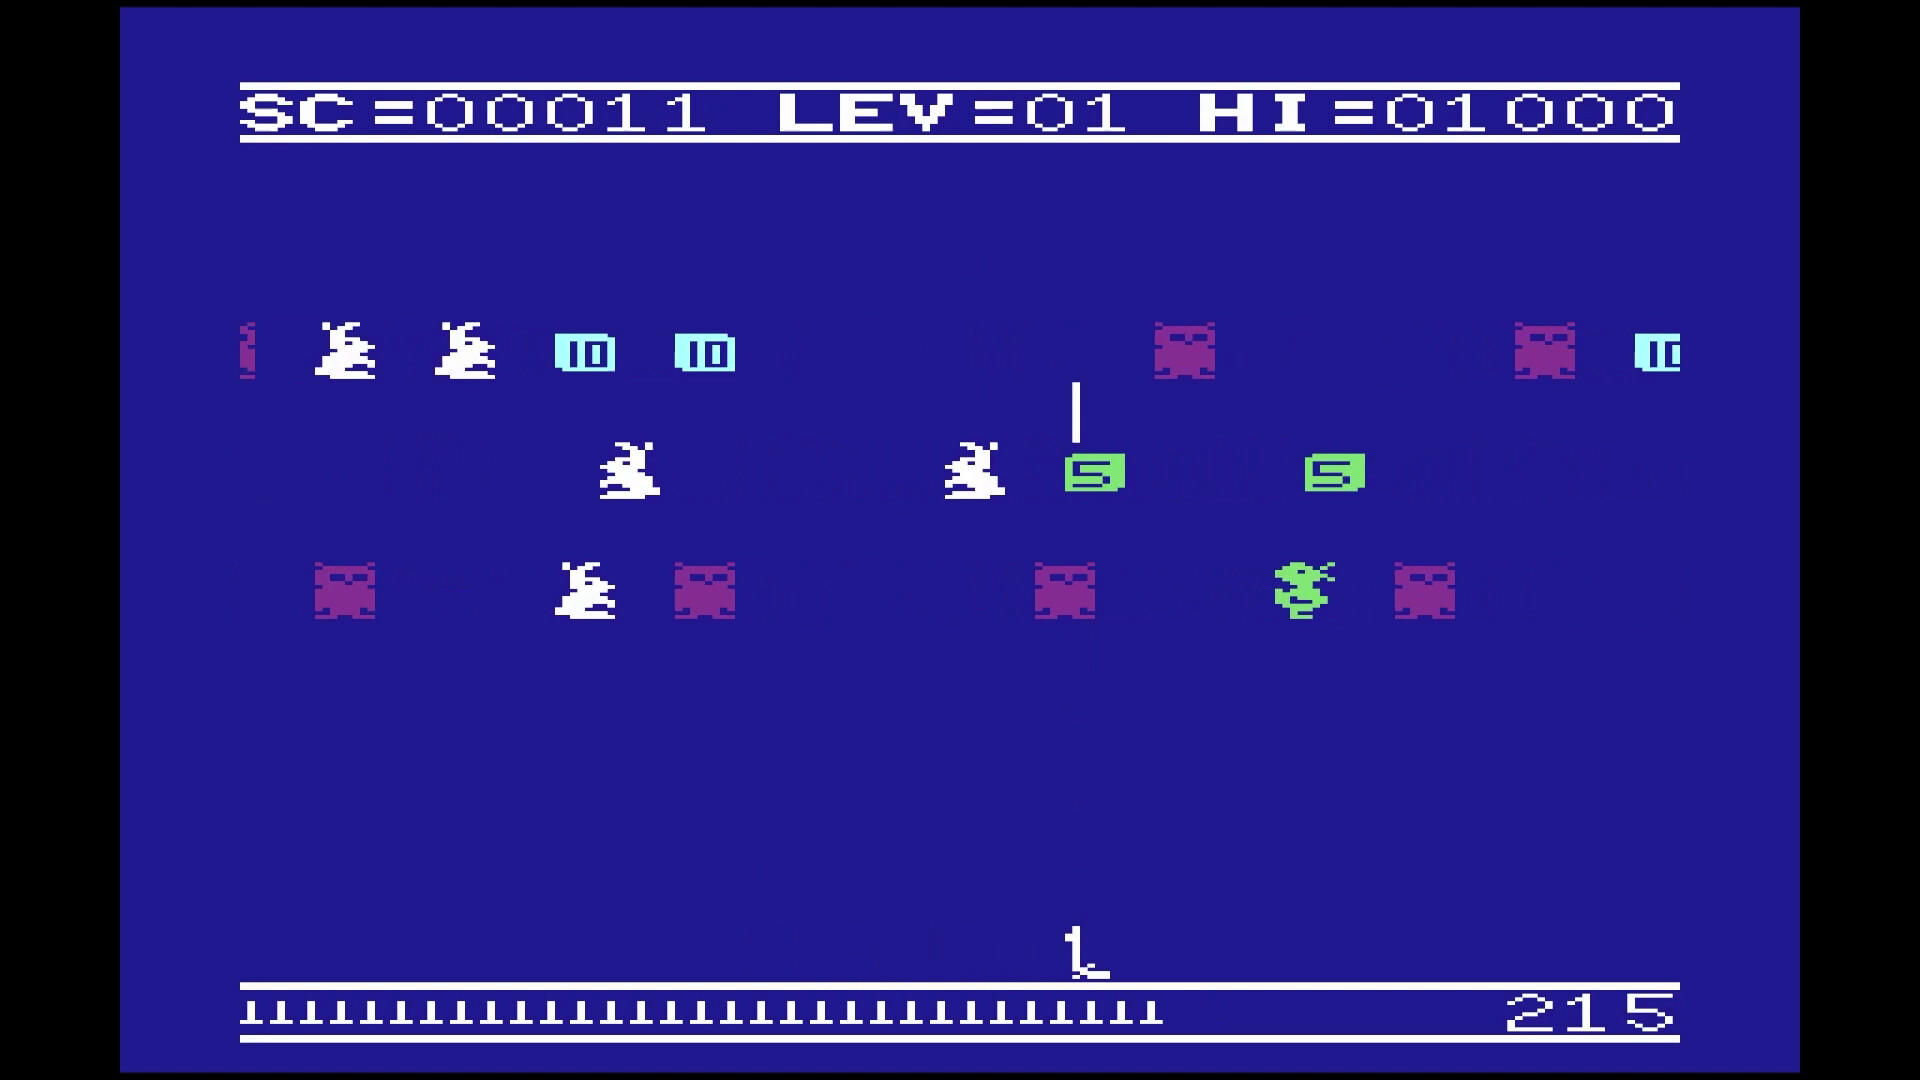 Duck Shoot (C64/VIC-20) screenshot game